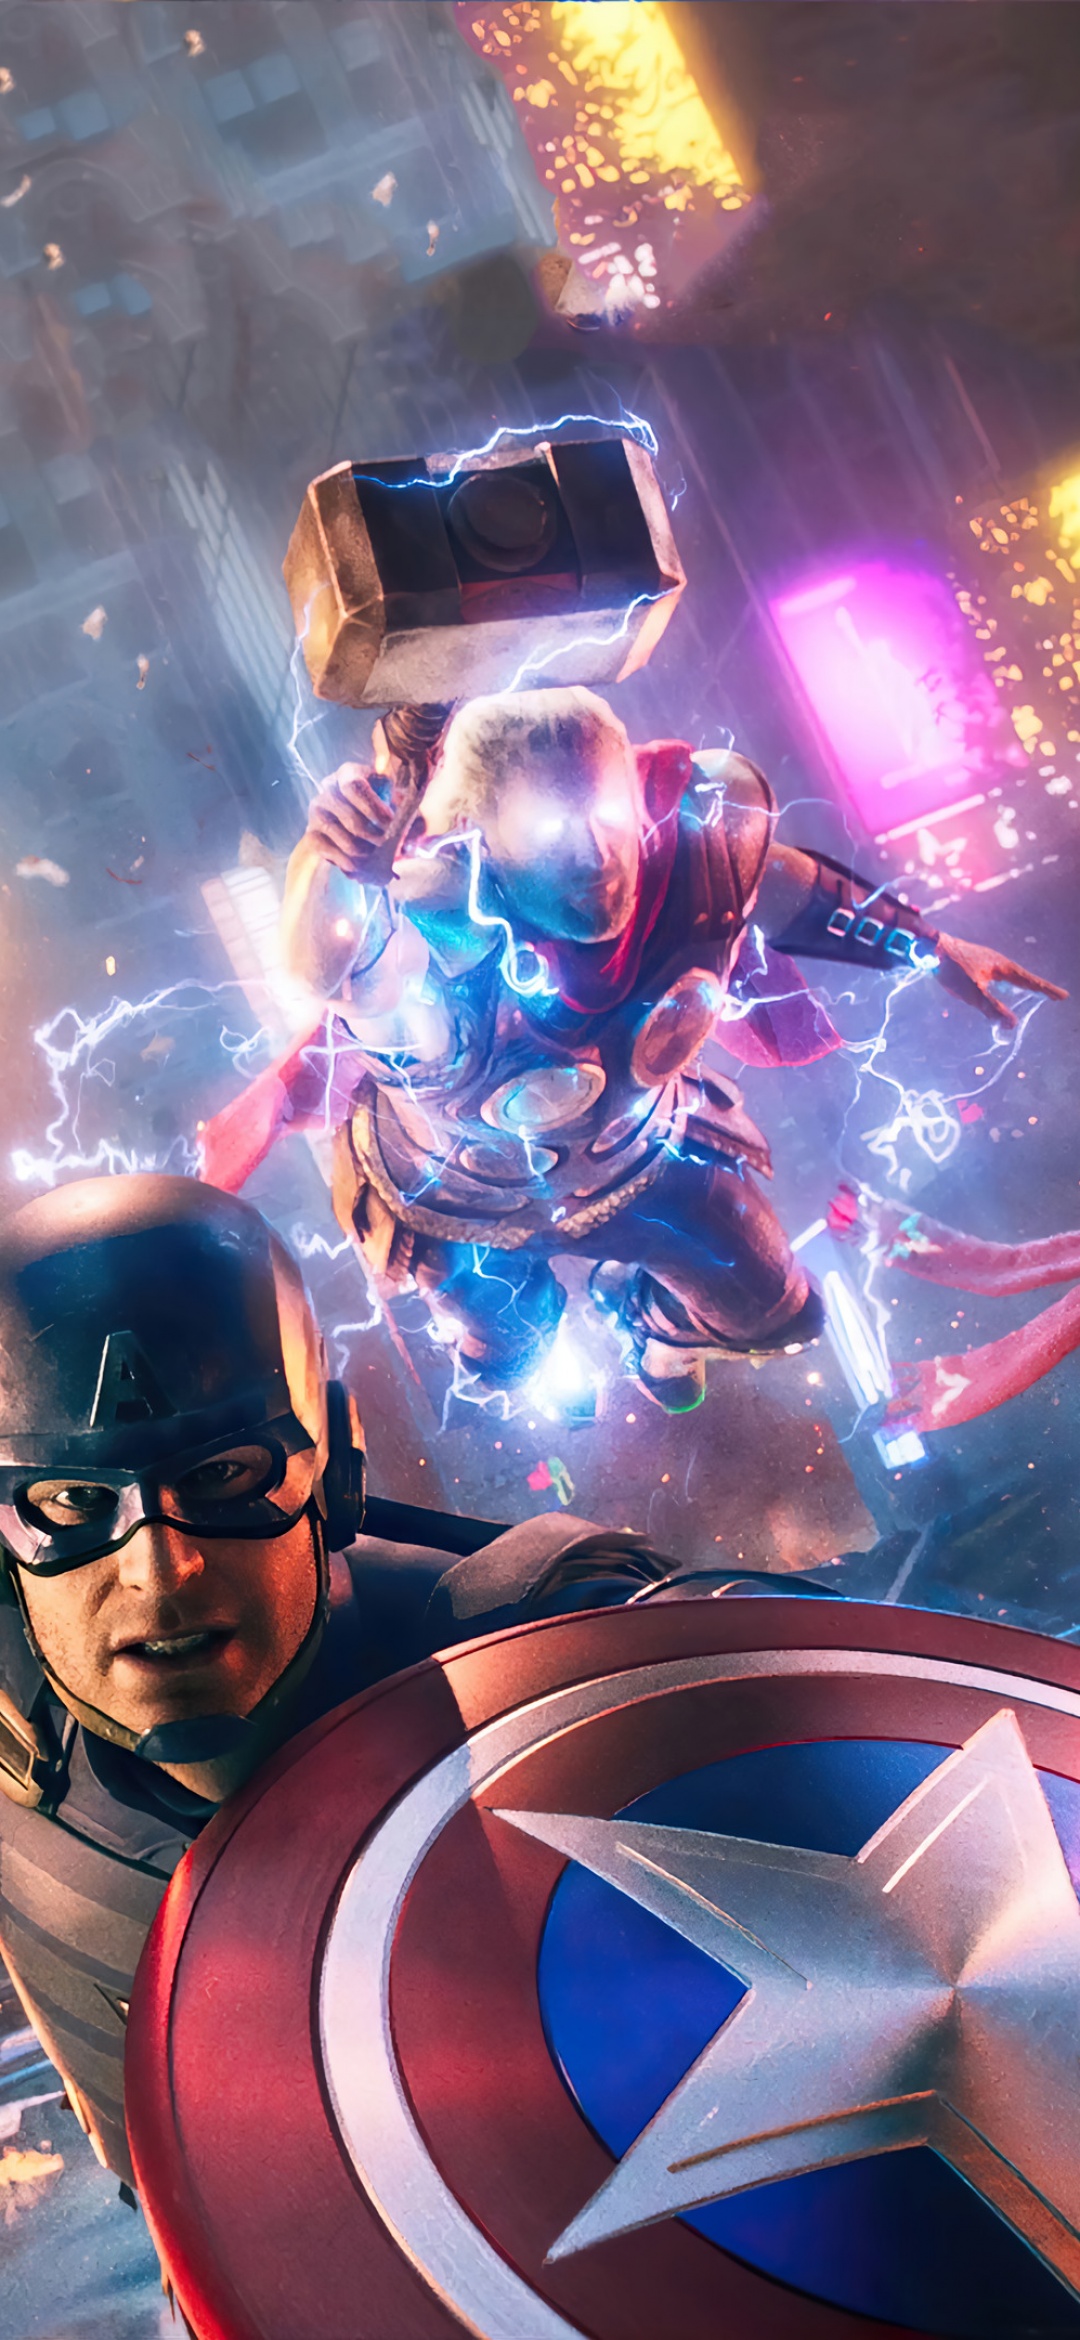 Marvel's Avengers 4K Wallpaper, Marvel Superheroes, PlayStation 4